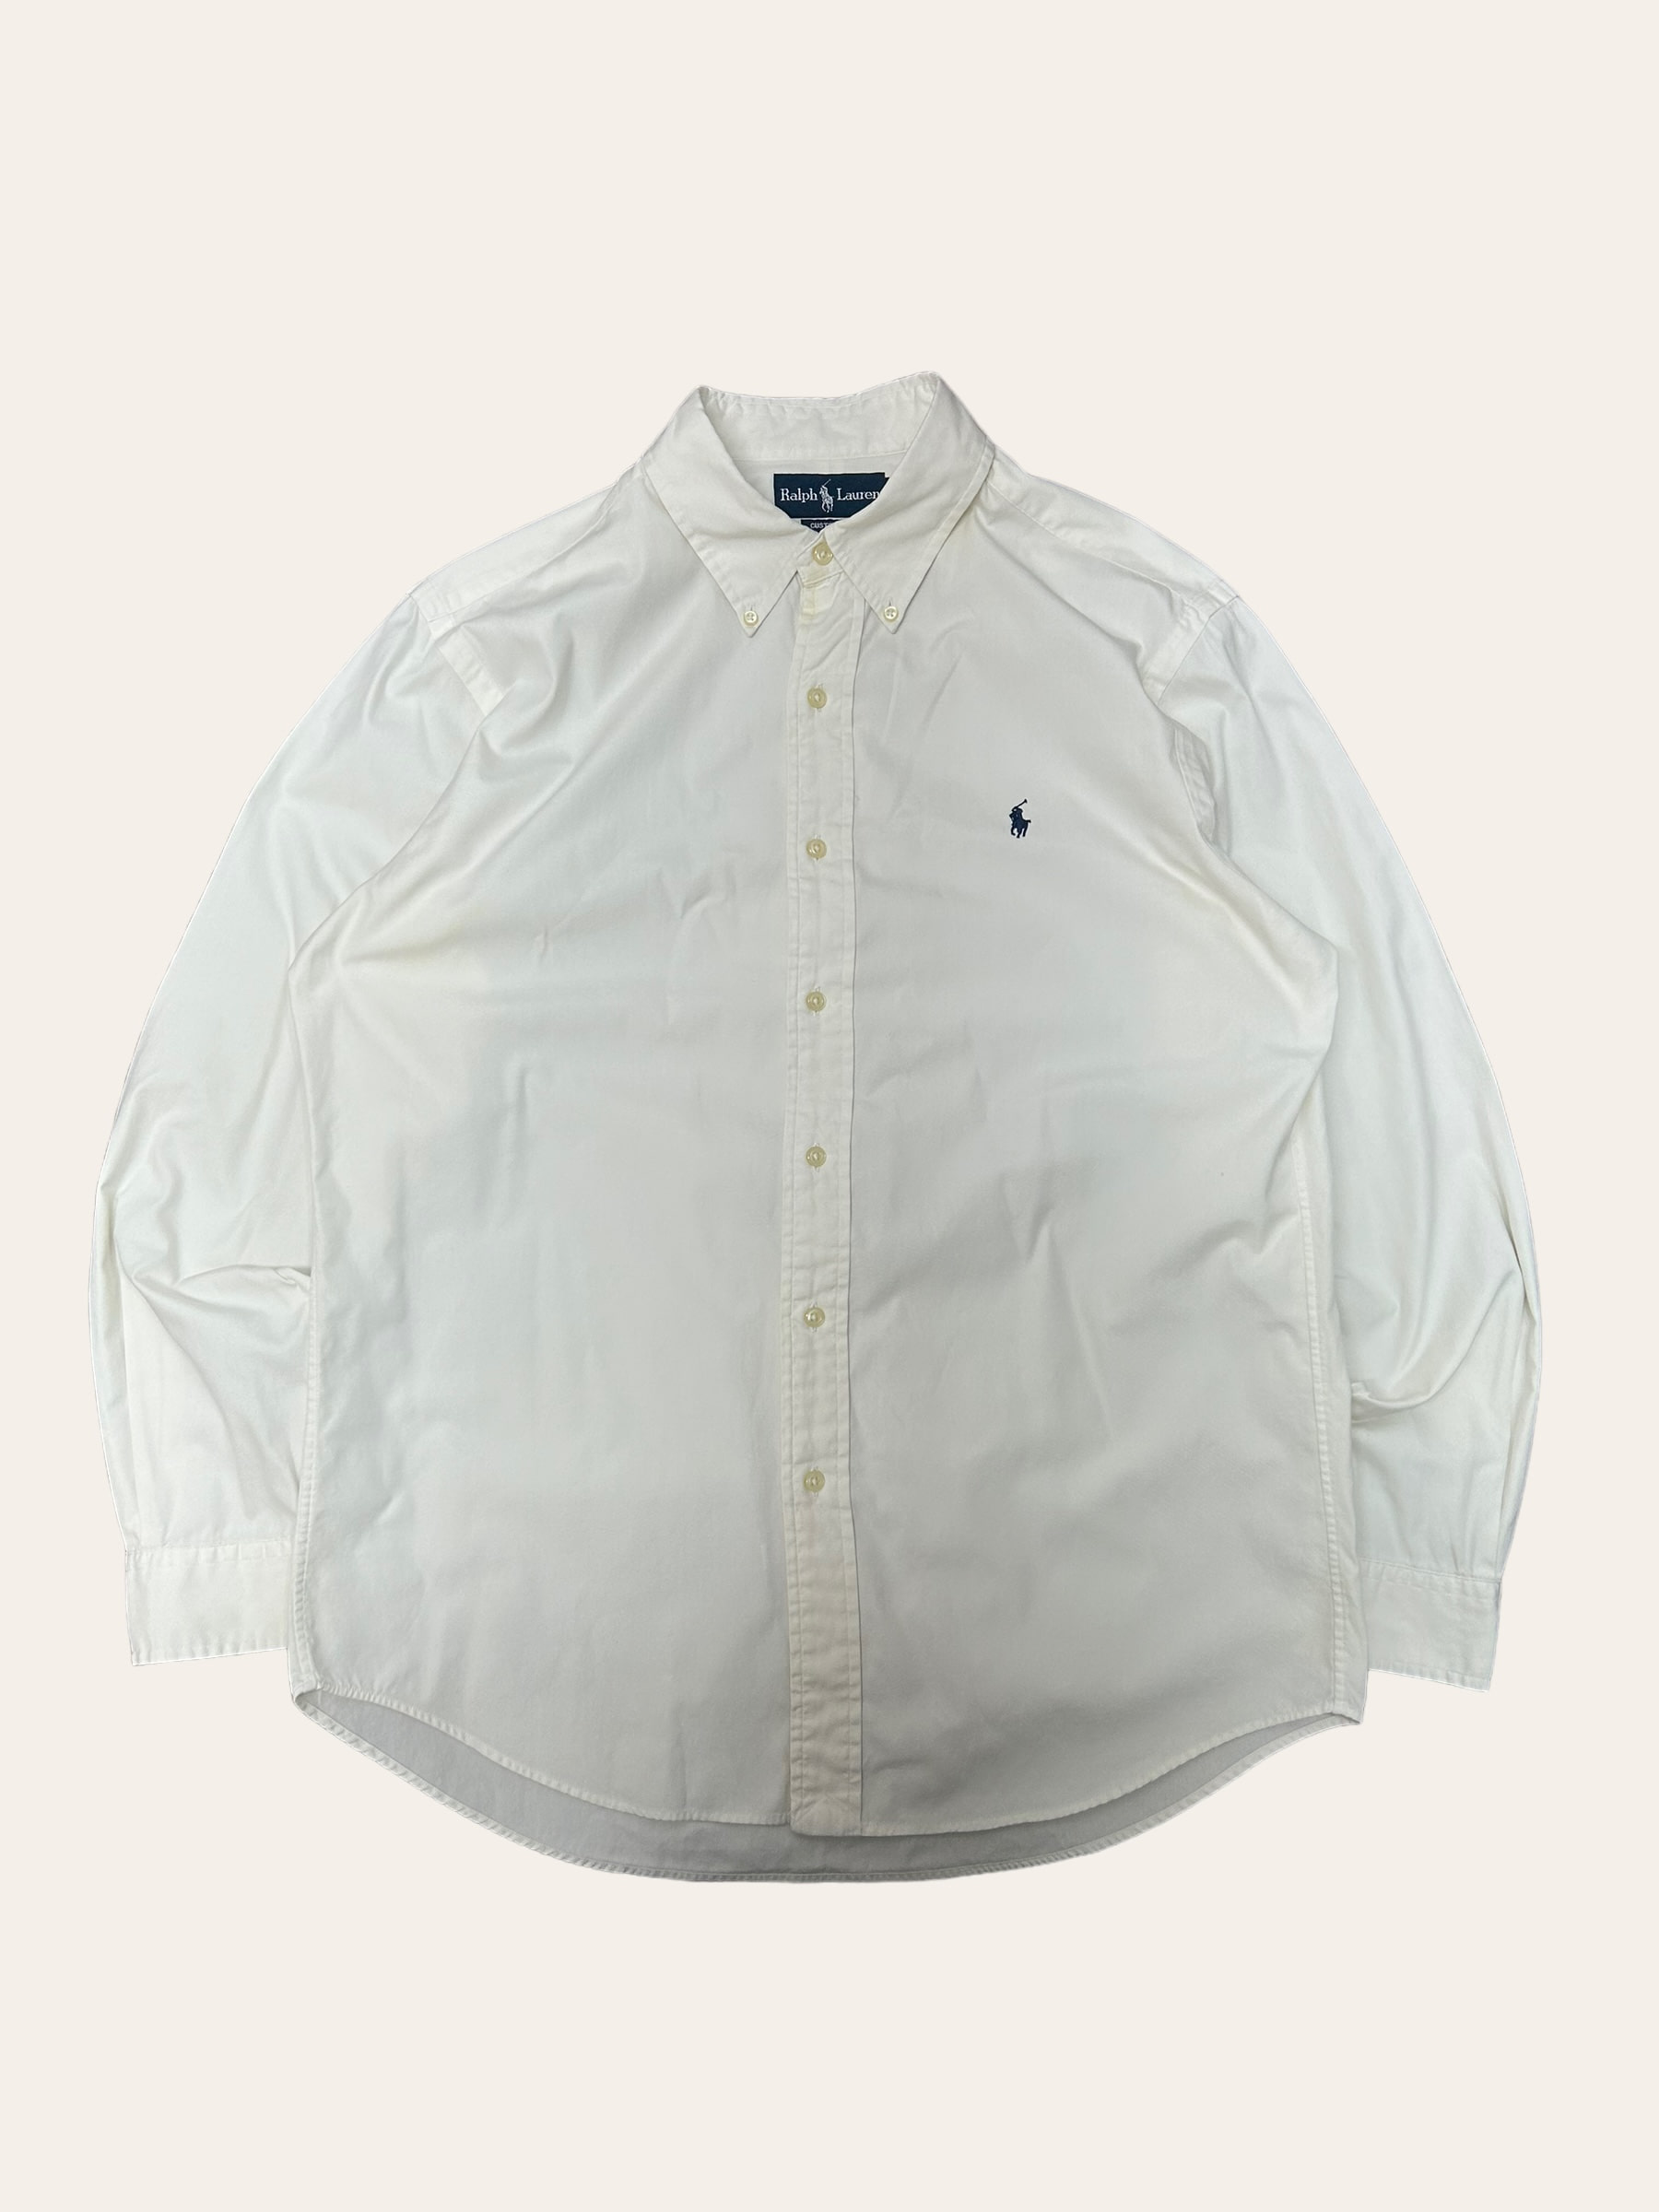 Polo ralph lauren white solid shirt 43